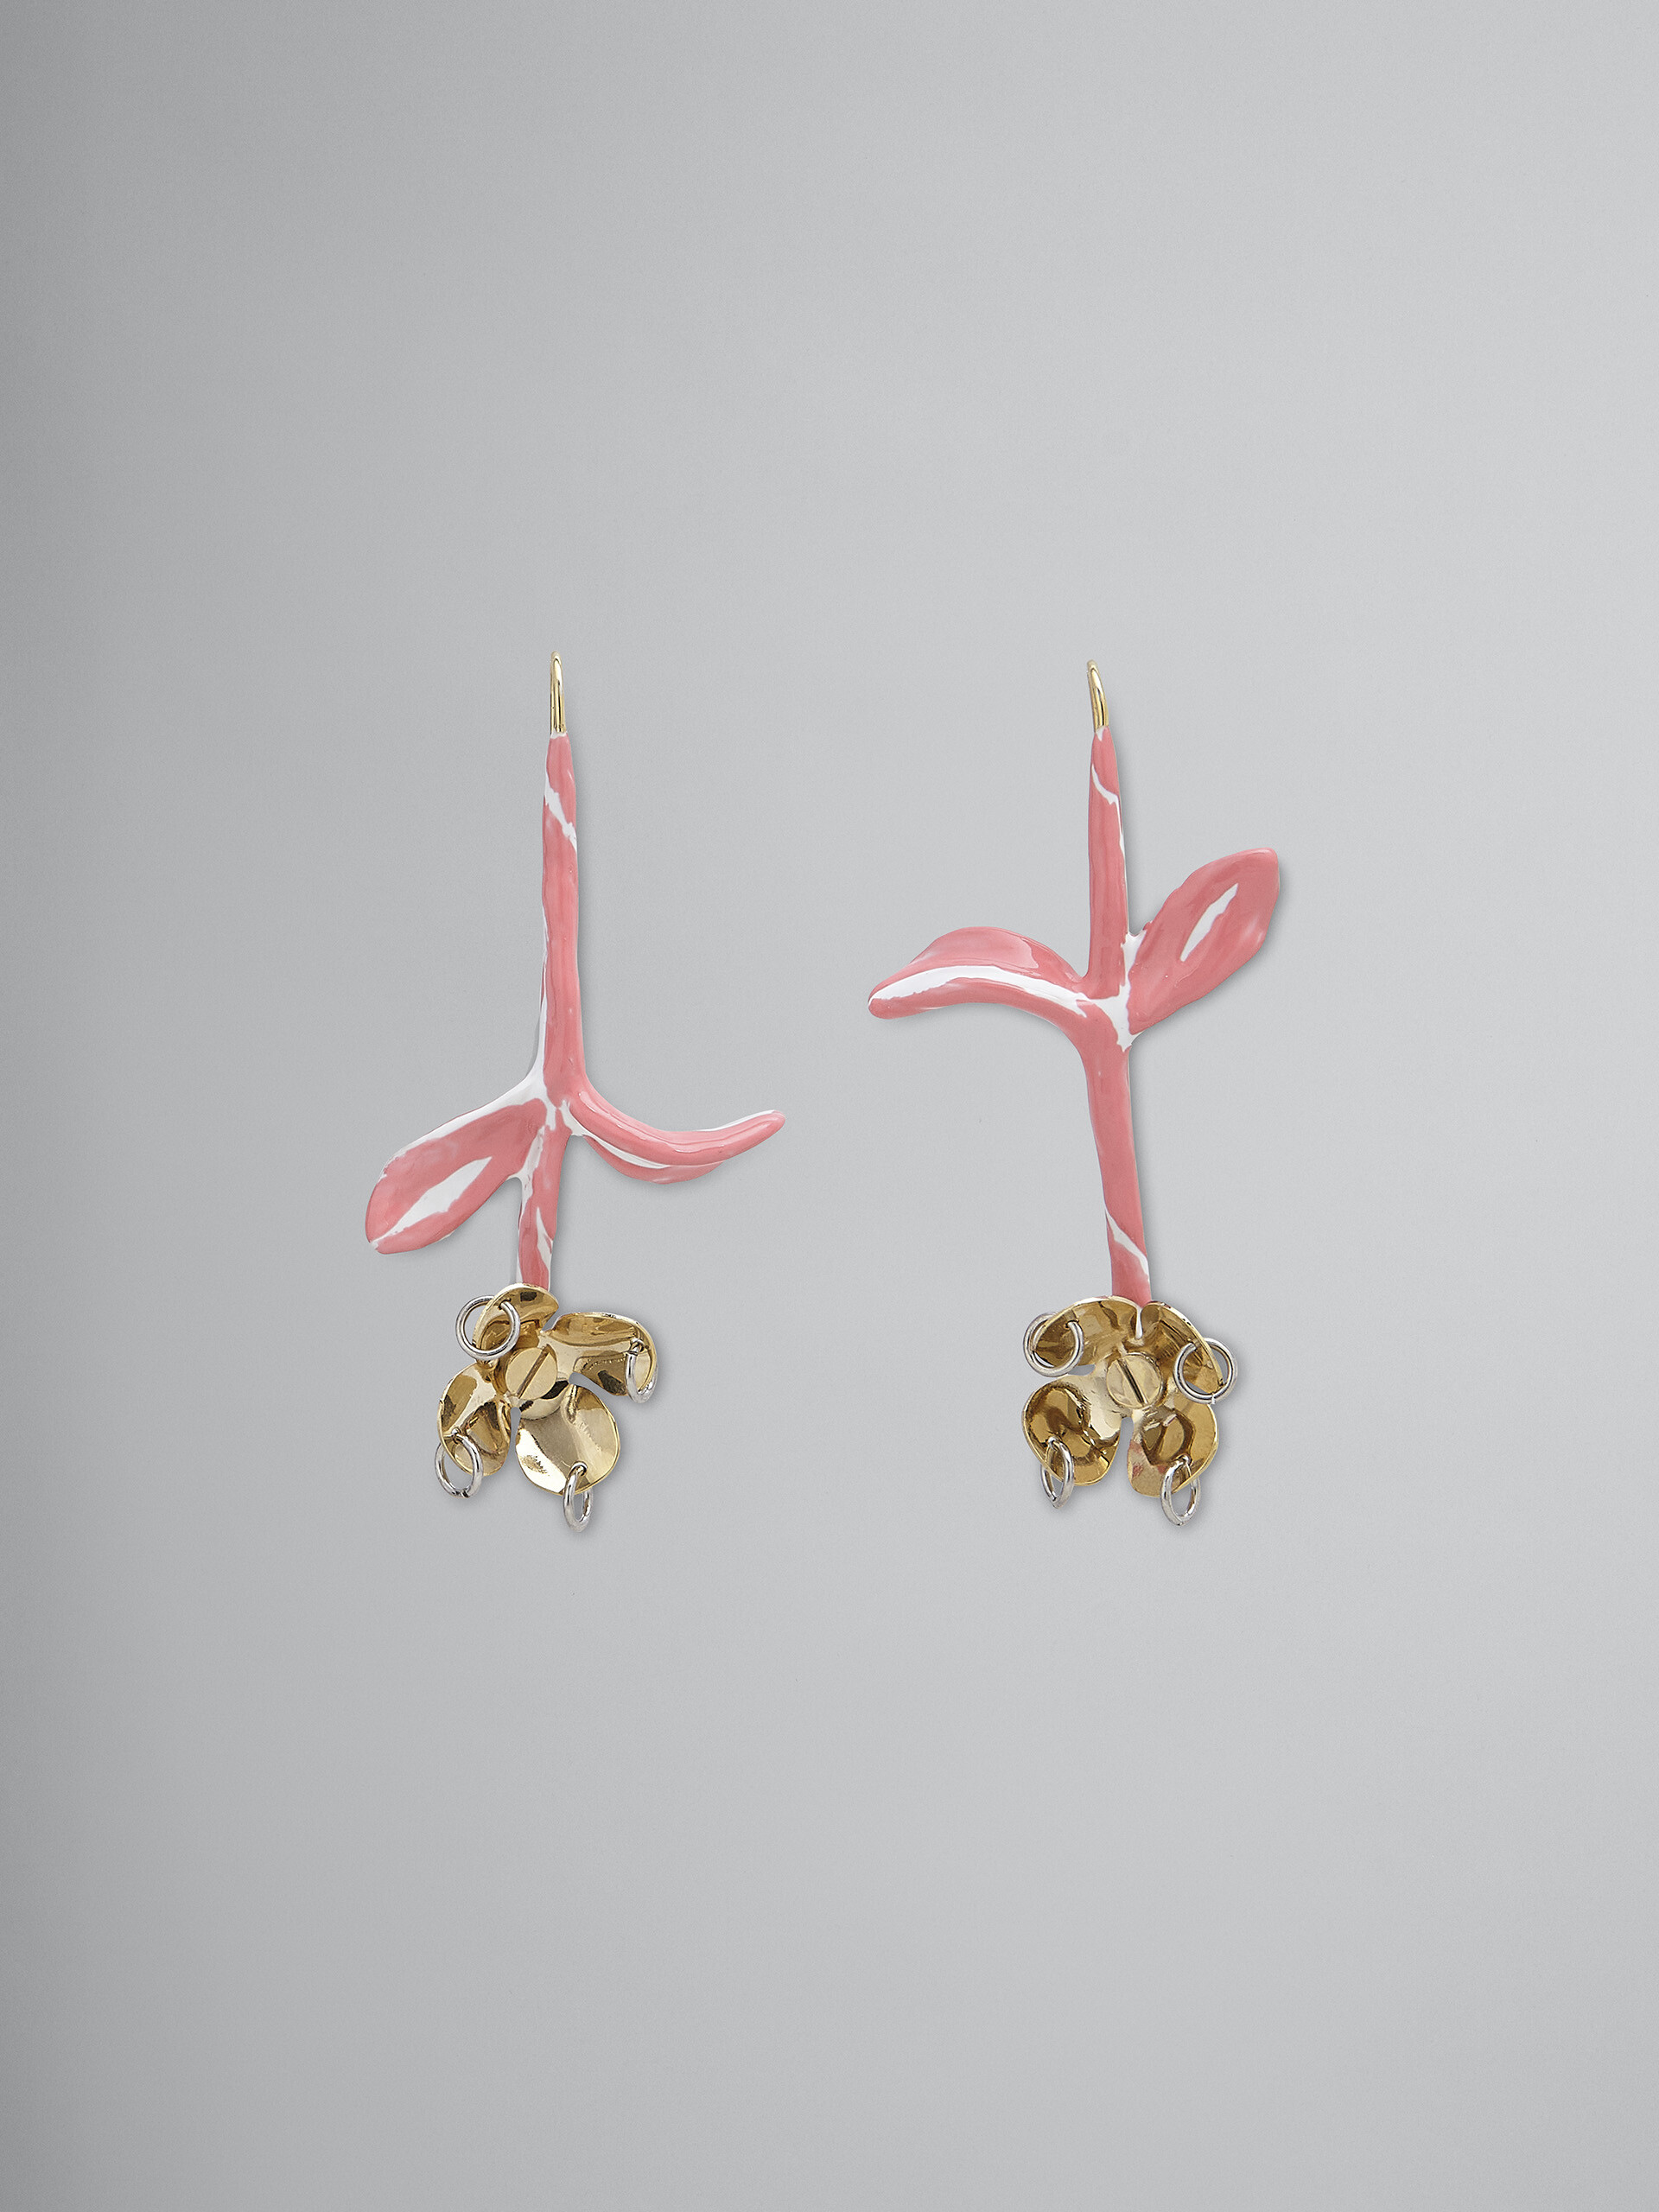 FLOWER pink earrings - Earrings - Image 1